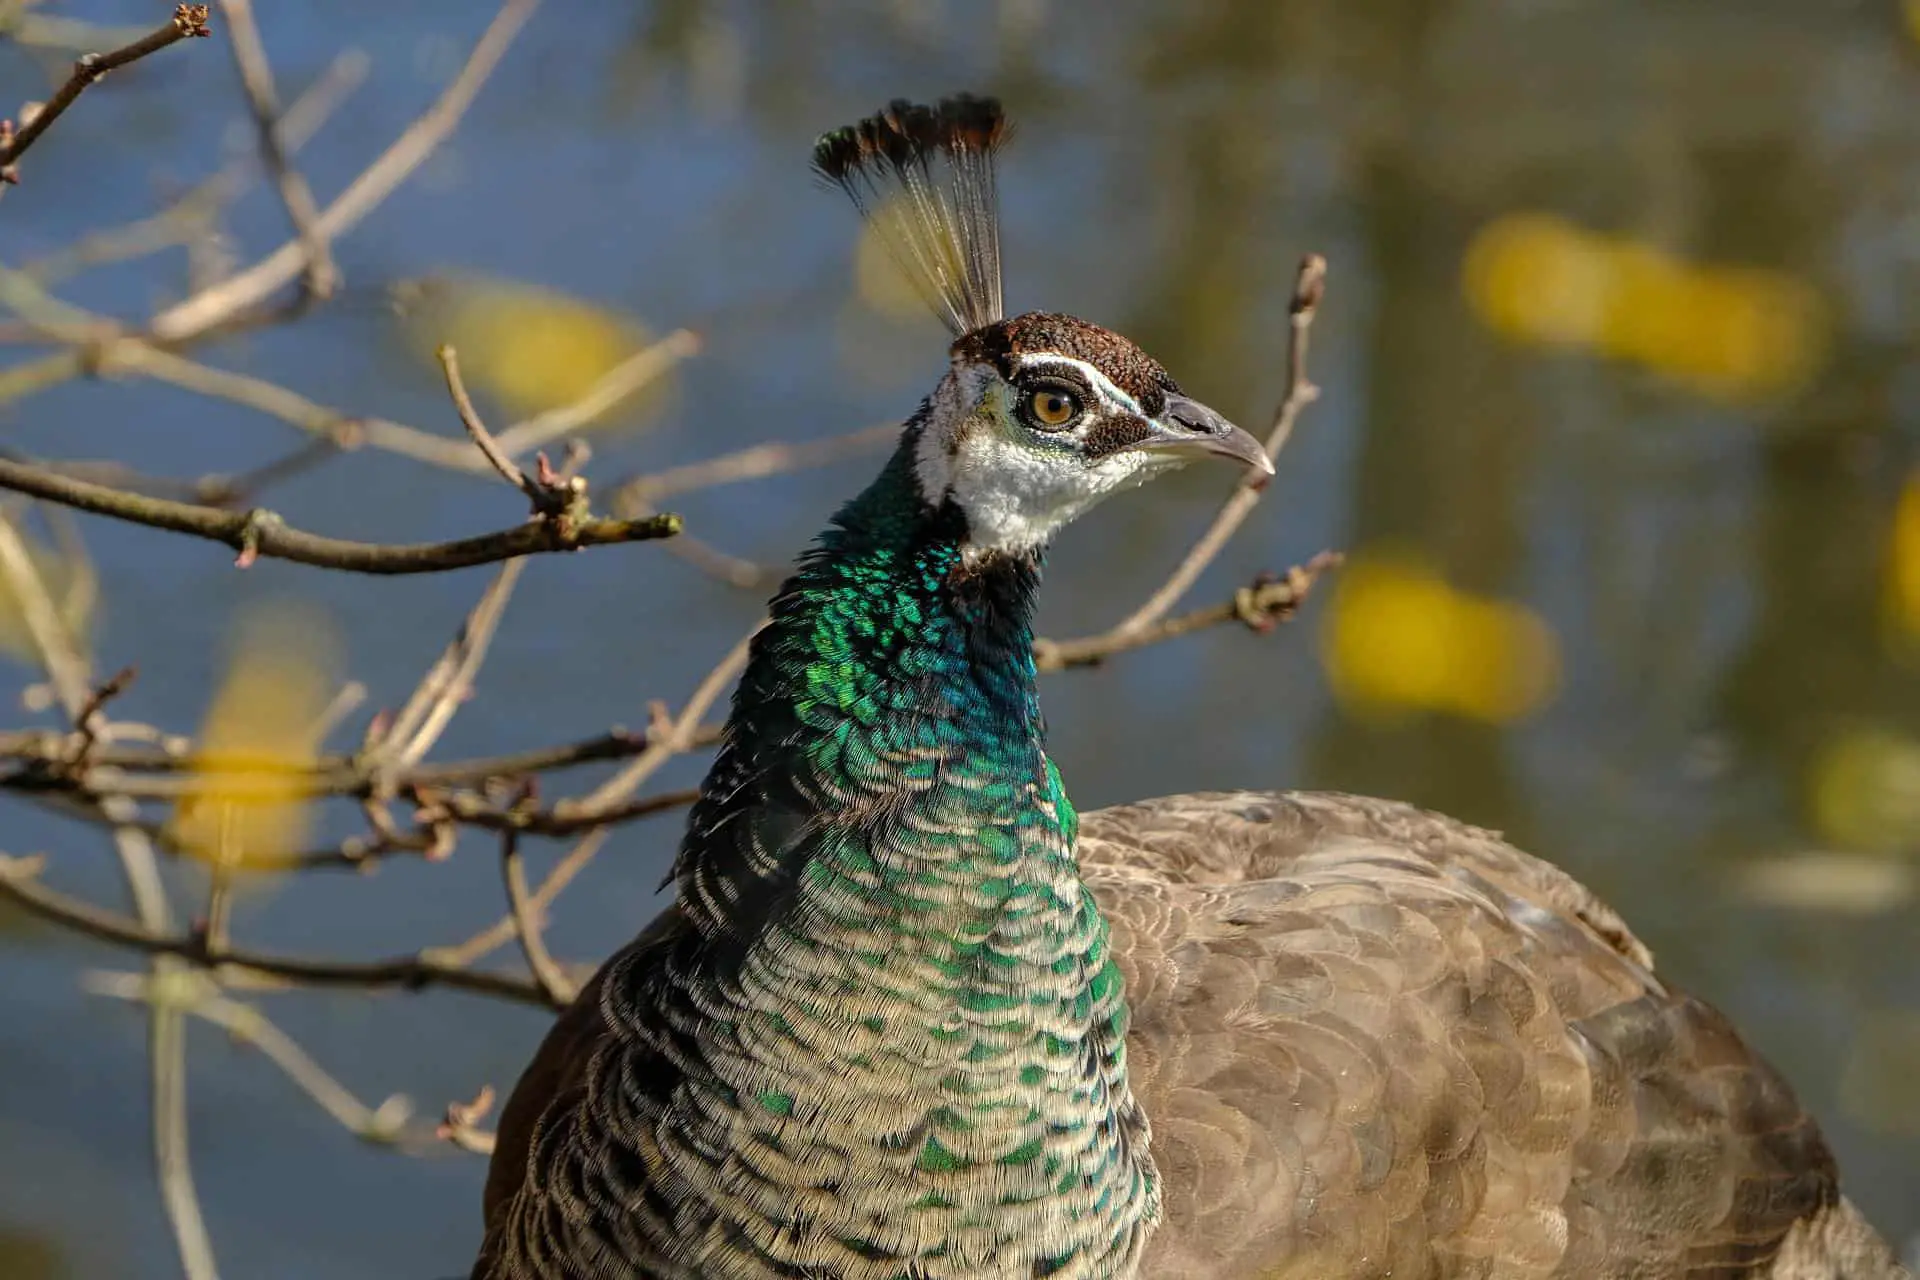 Why do peacocks make noise